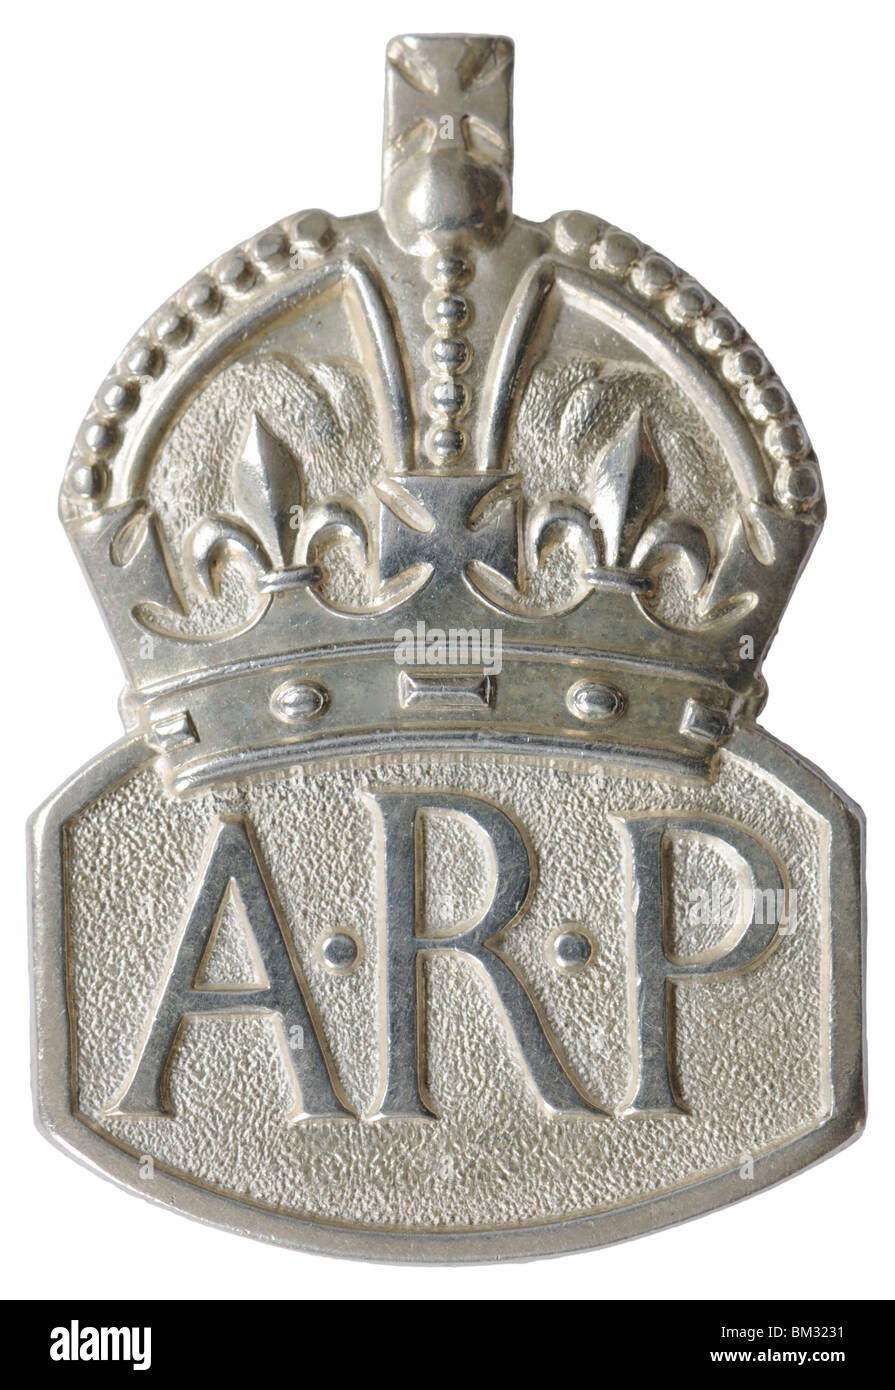 Silver ARP / Air Raid Precaution badge from Second World War Stock Photo